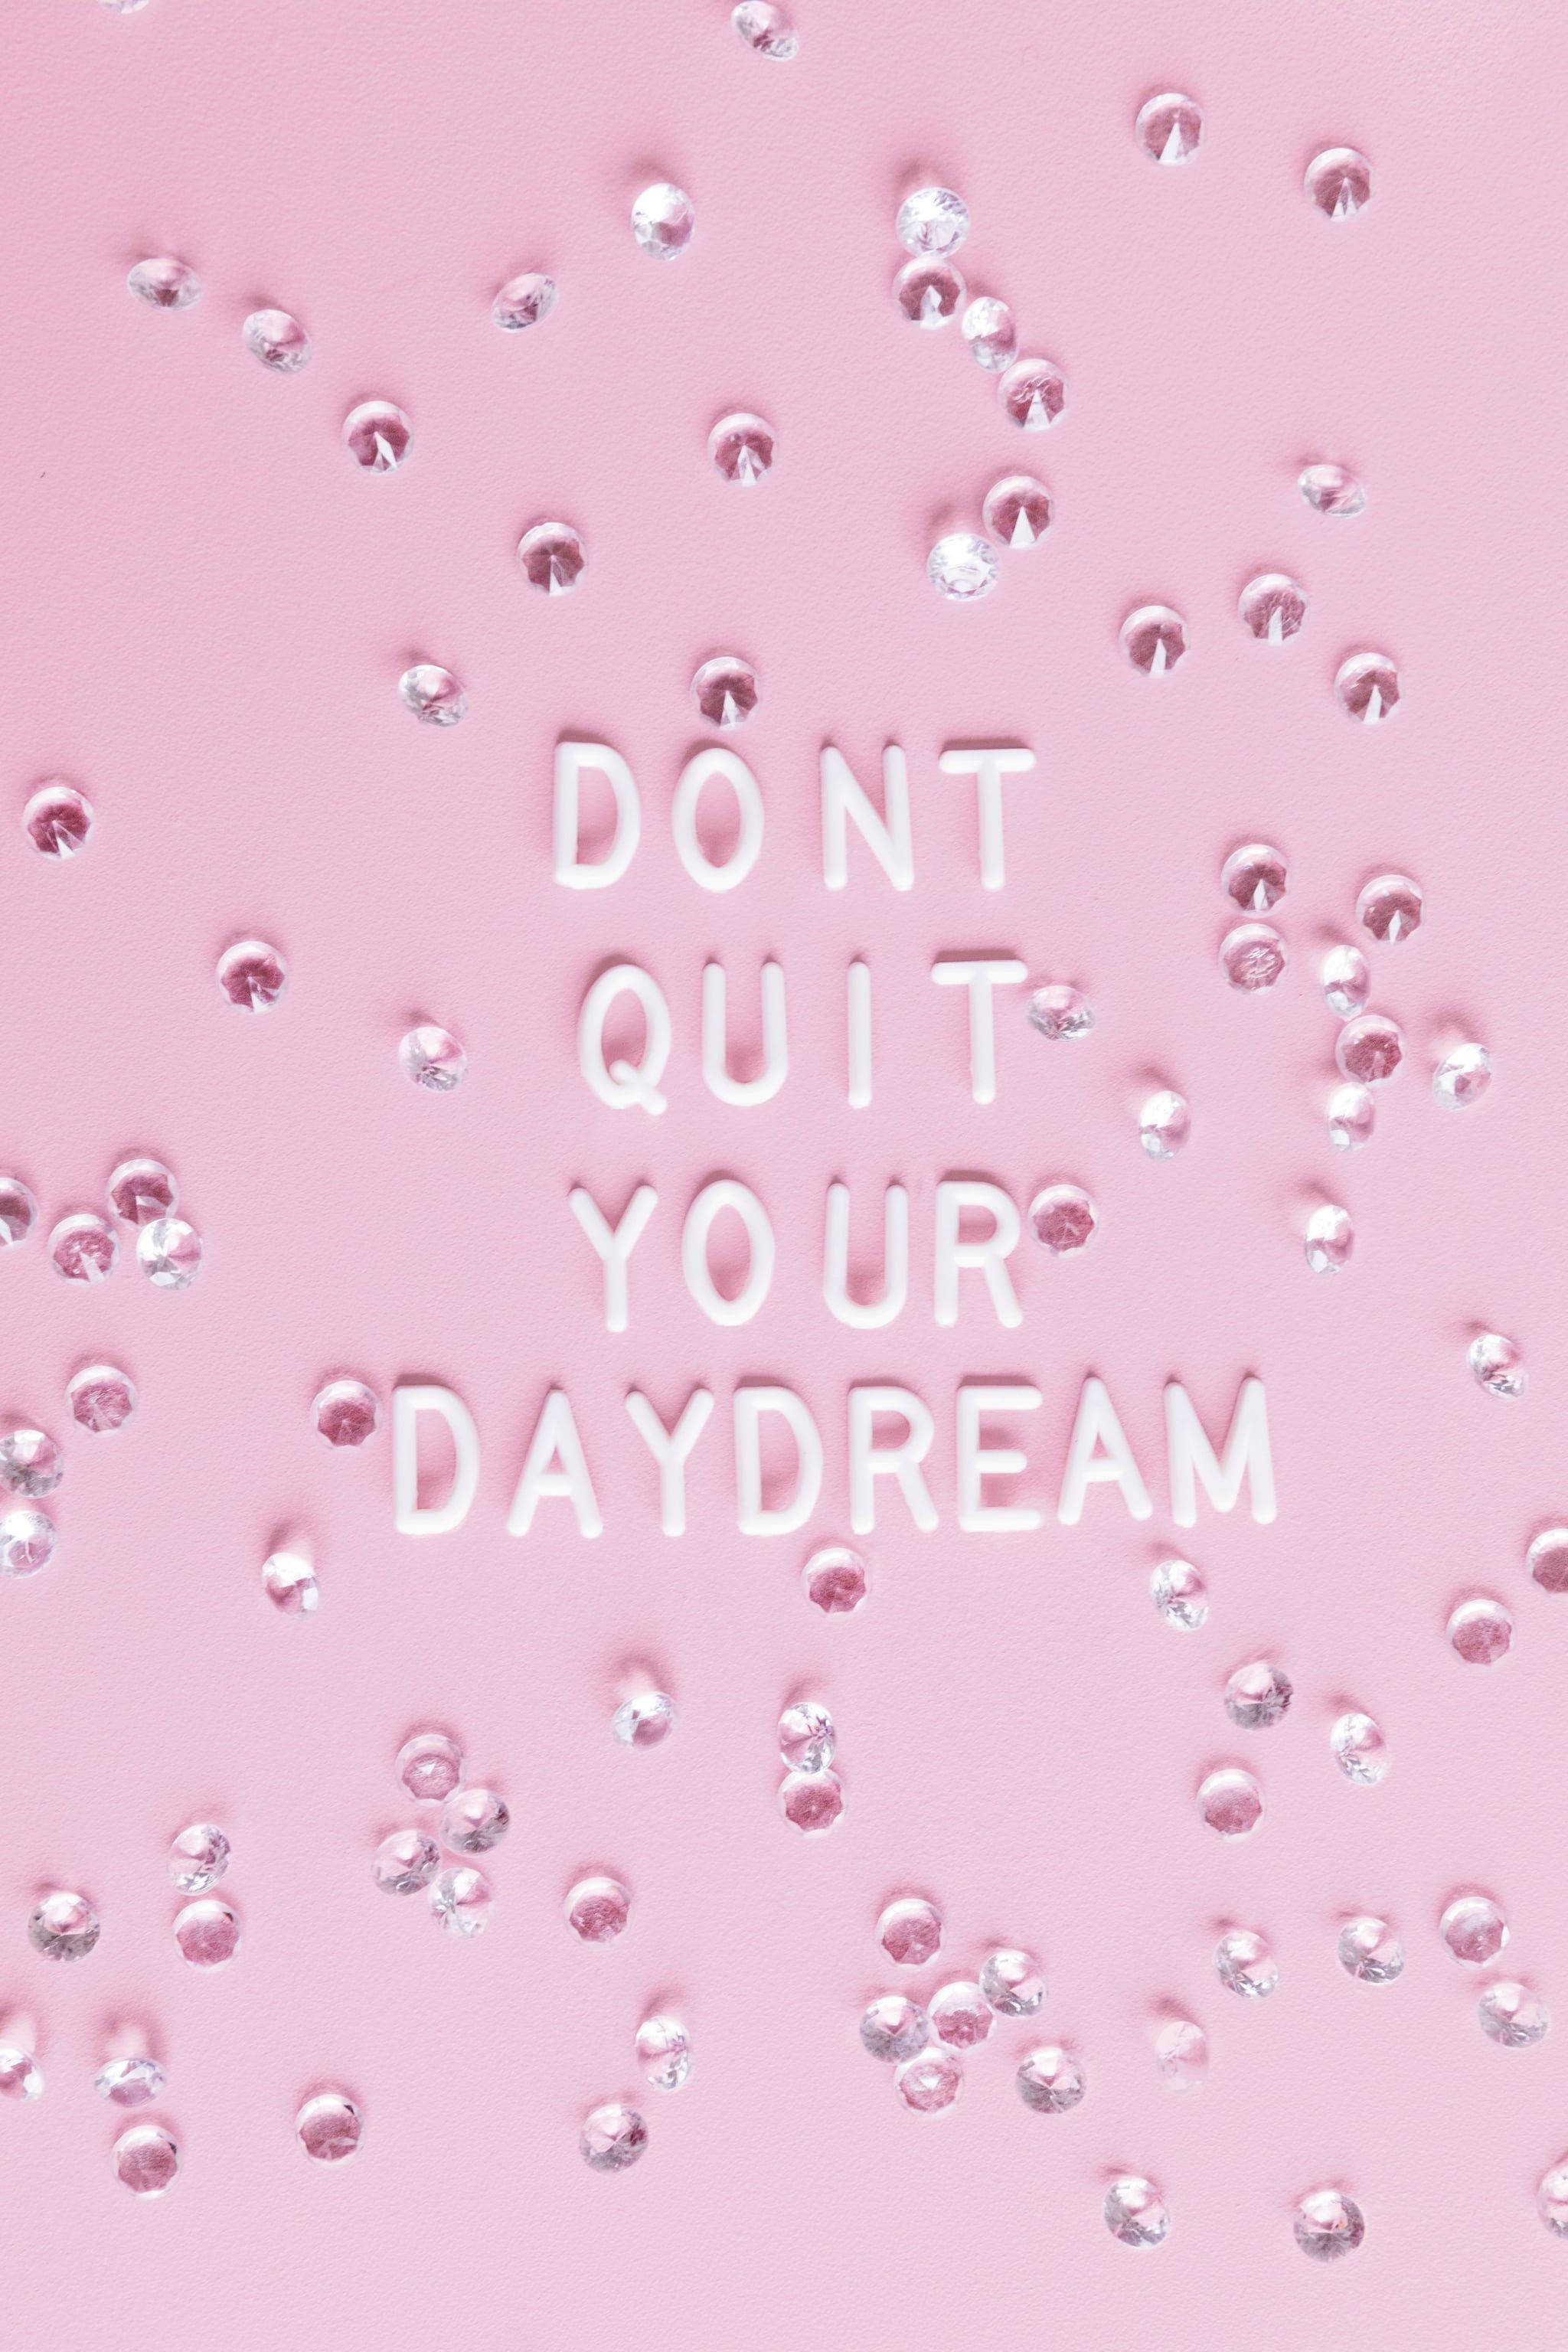 Inspiring Quotes Phone Daydream Wallpaper